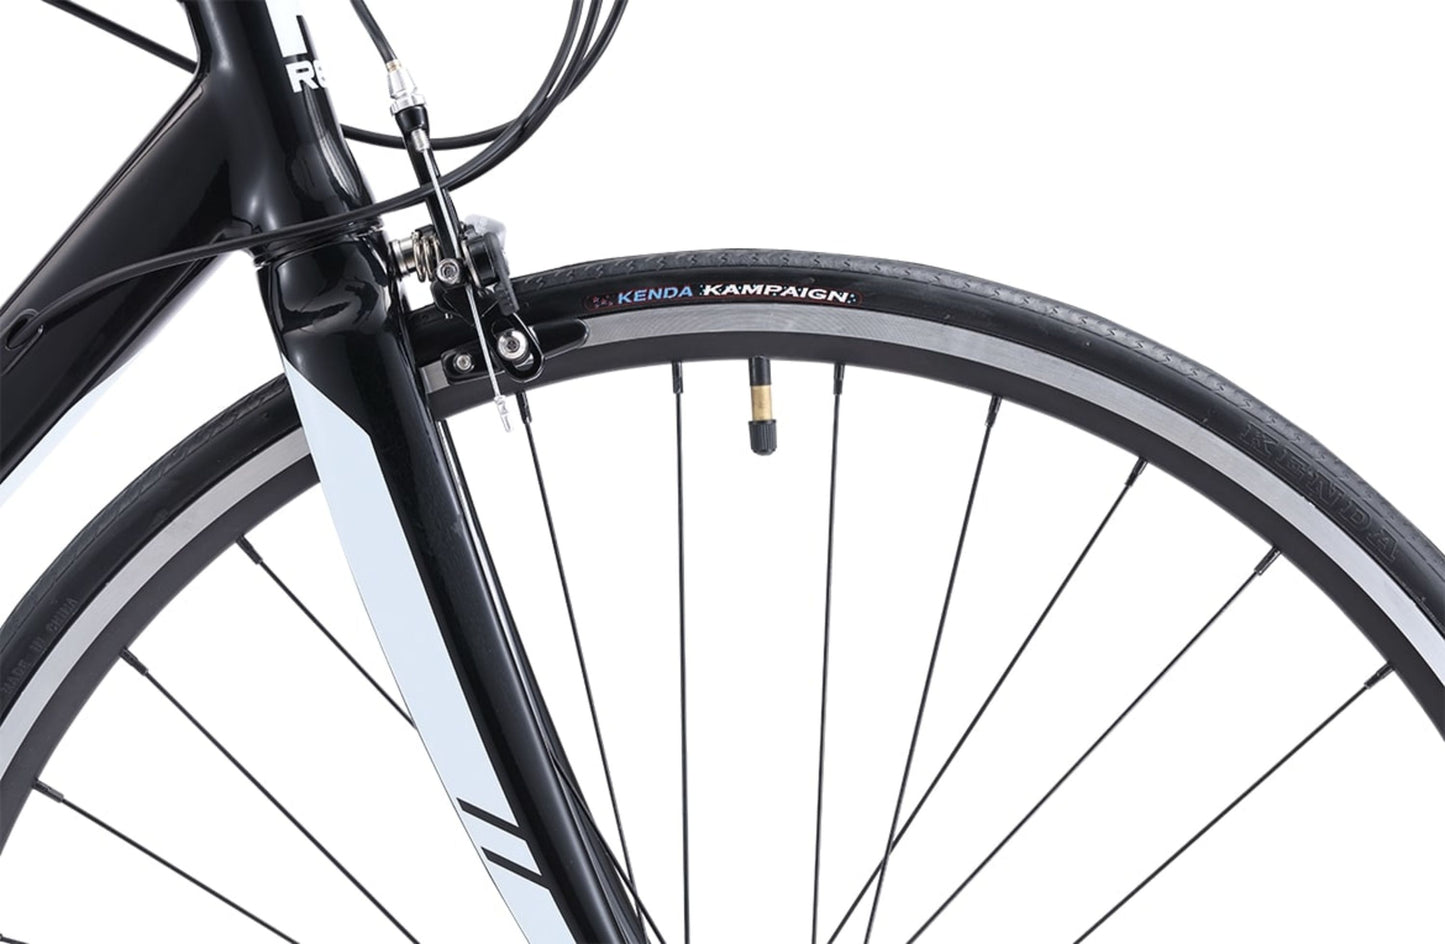 Osprey Flatbar Road Bike in Black showing Kenda road bike tyre from Reid Cycles Australia